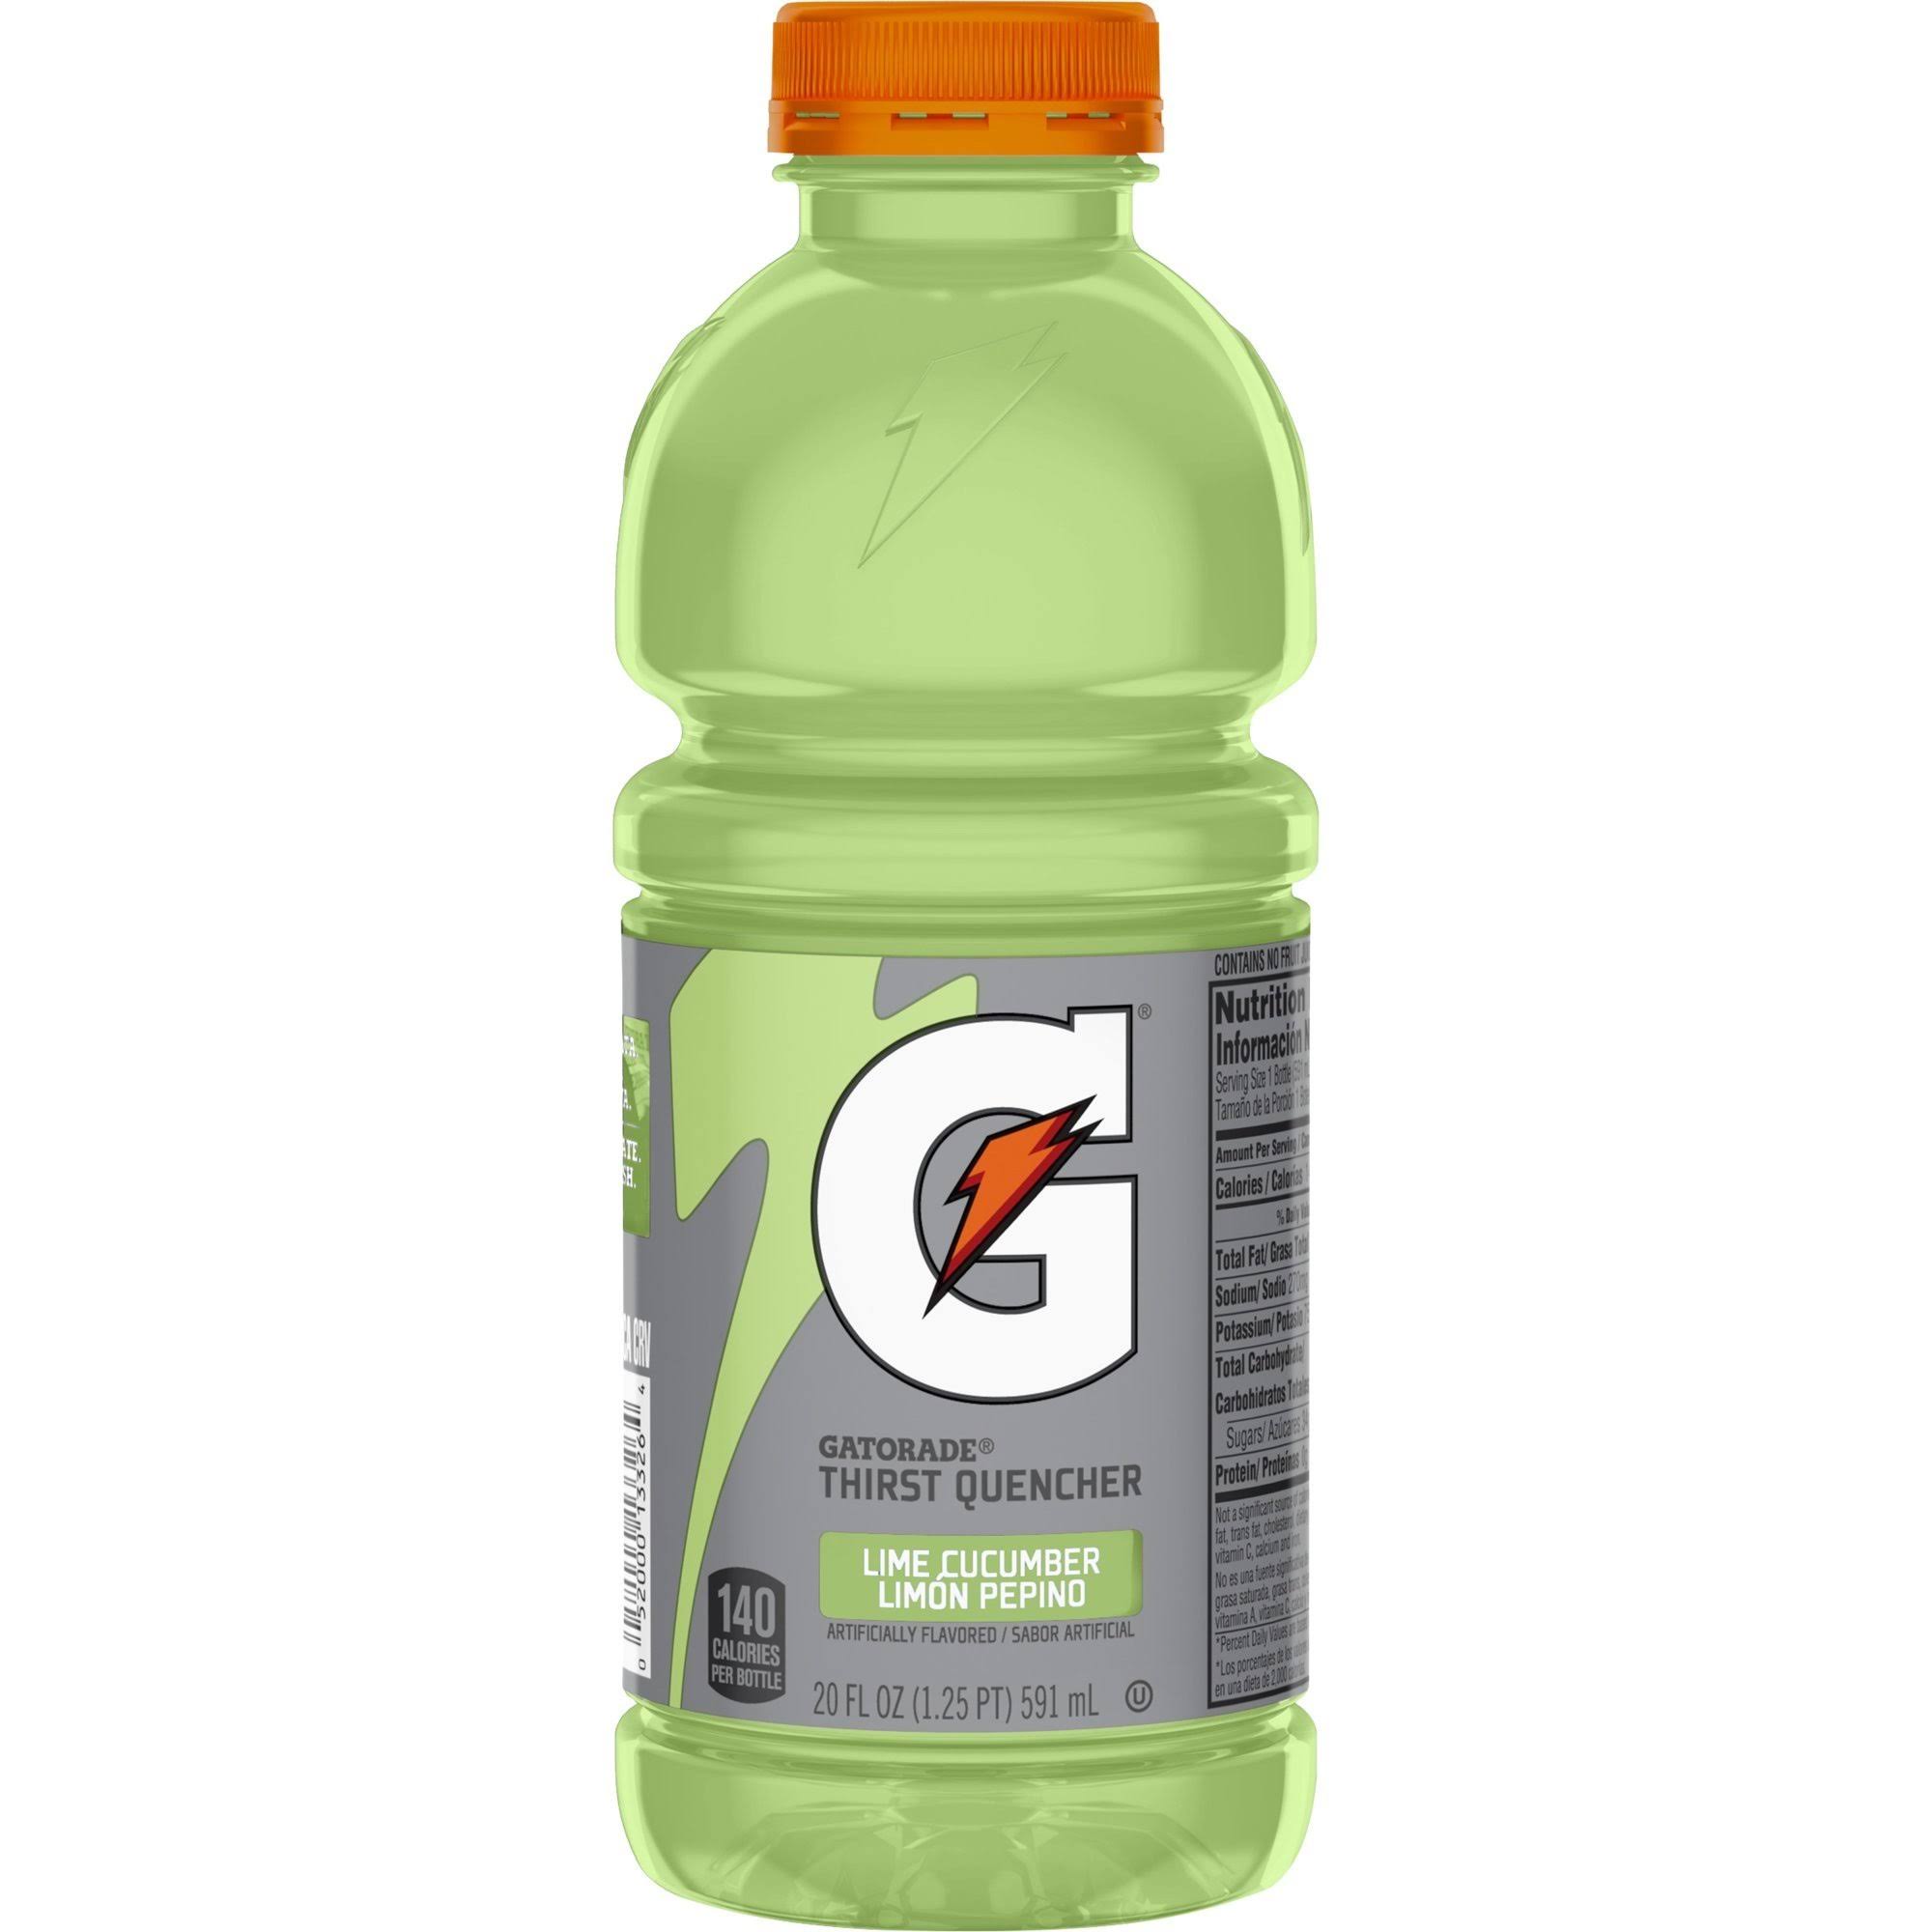 Gatorade Thirst Quencher, Lime Cucumber - 8 pack, 20 fl oz